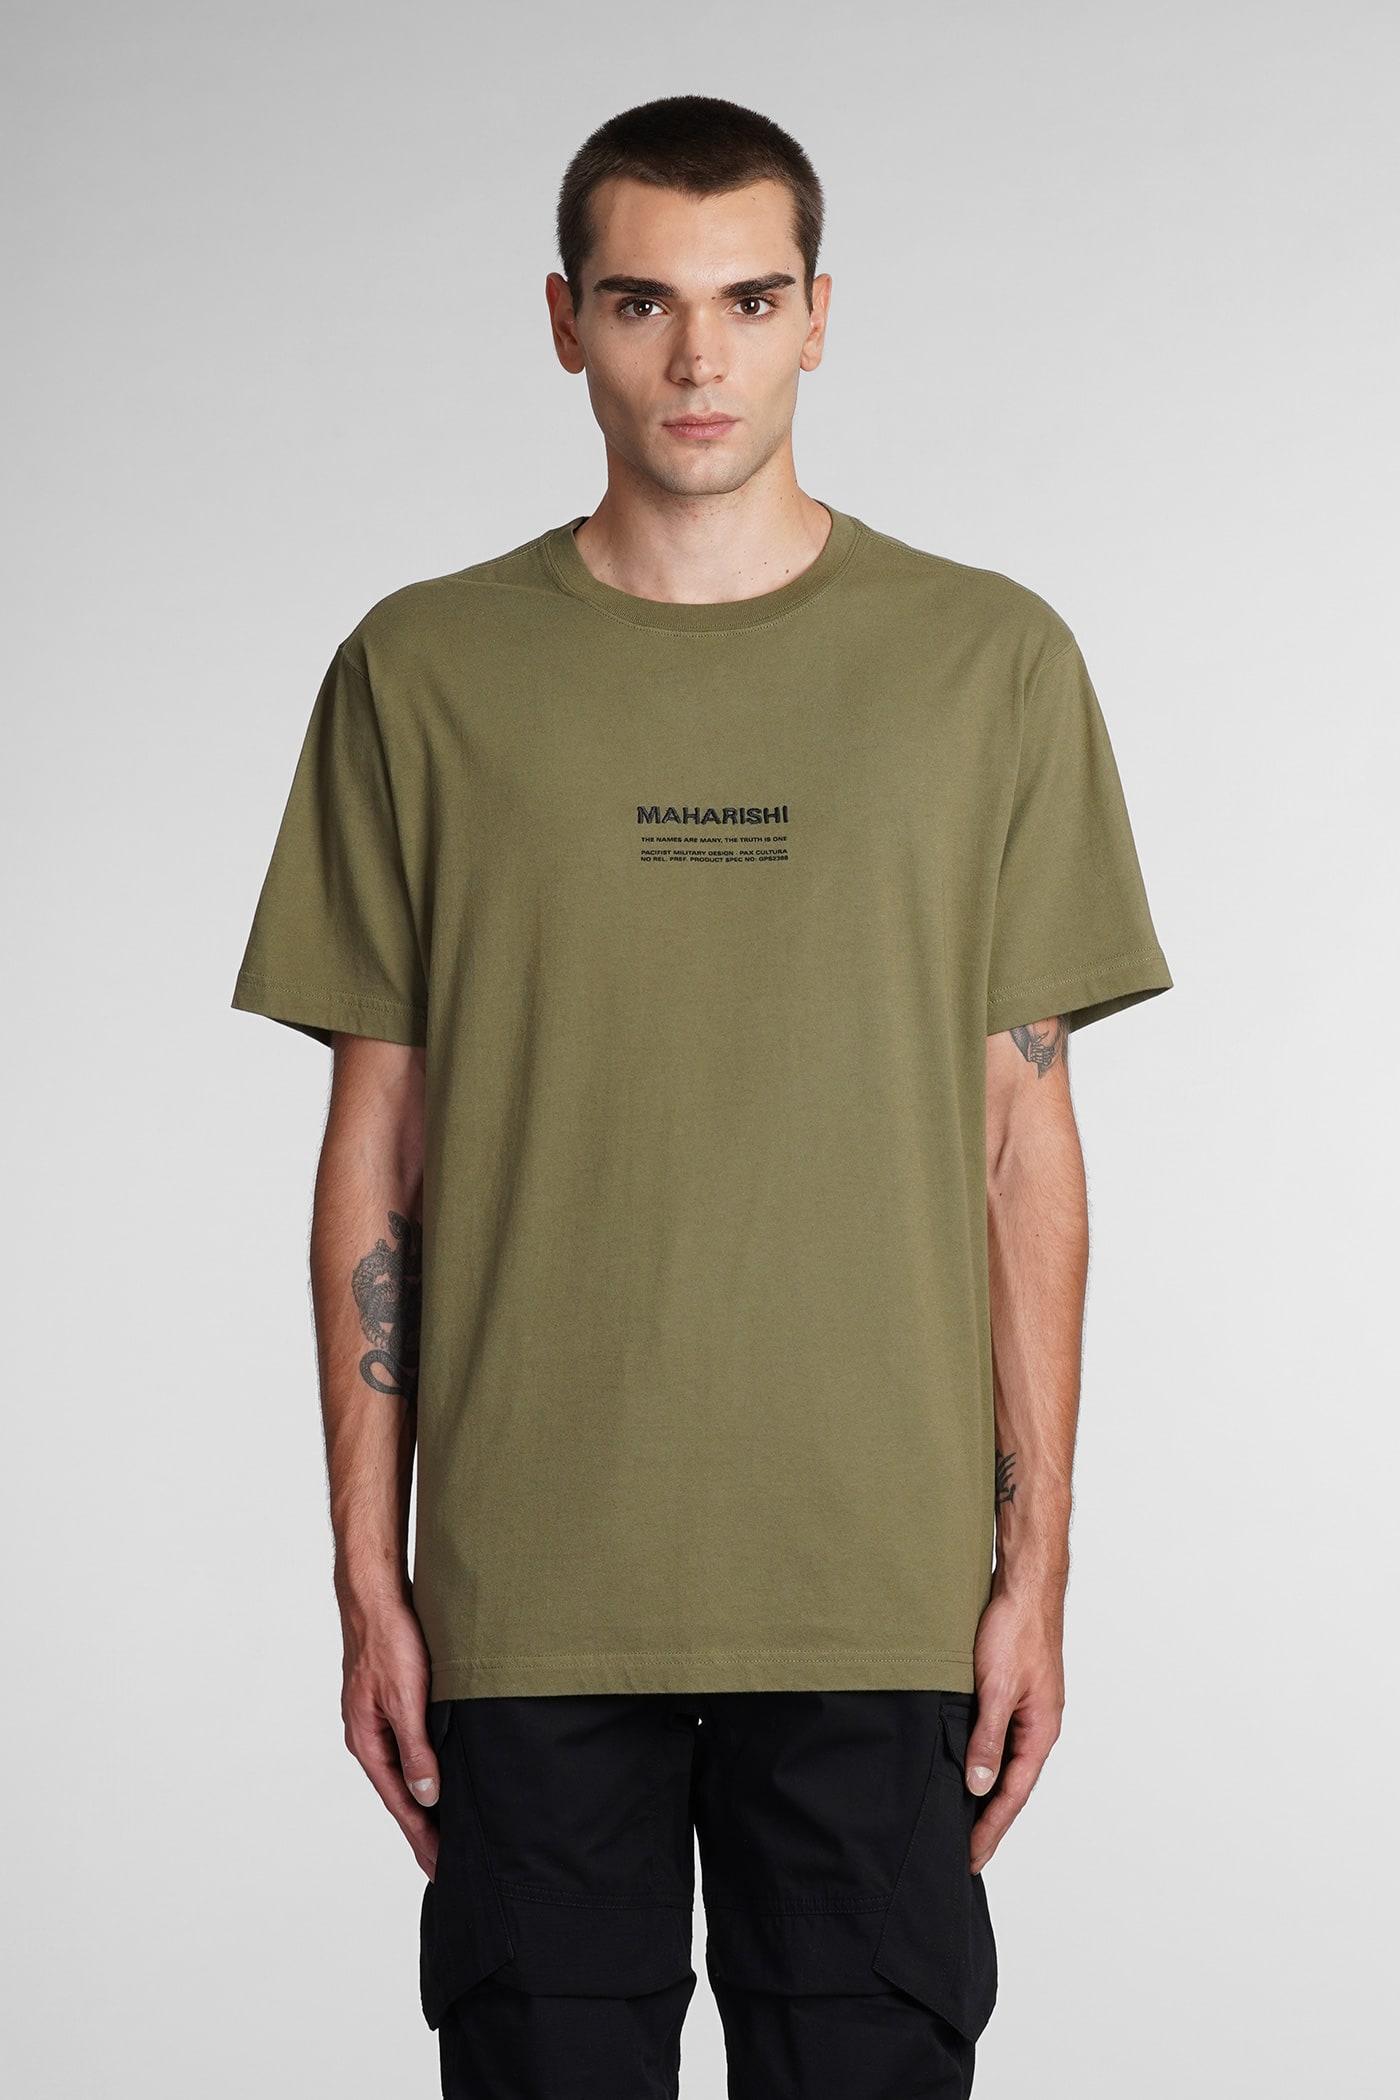 Maharishi T-shirt In Green Cotton for Men | Lyst